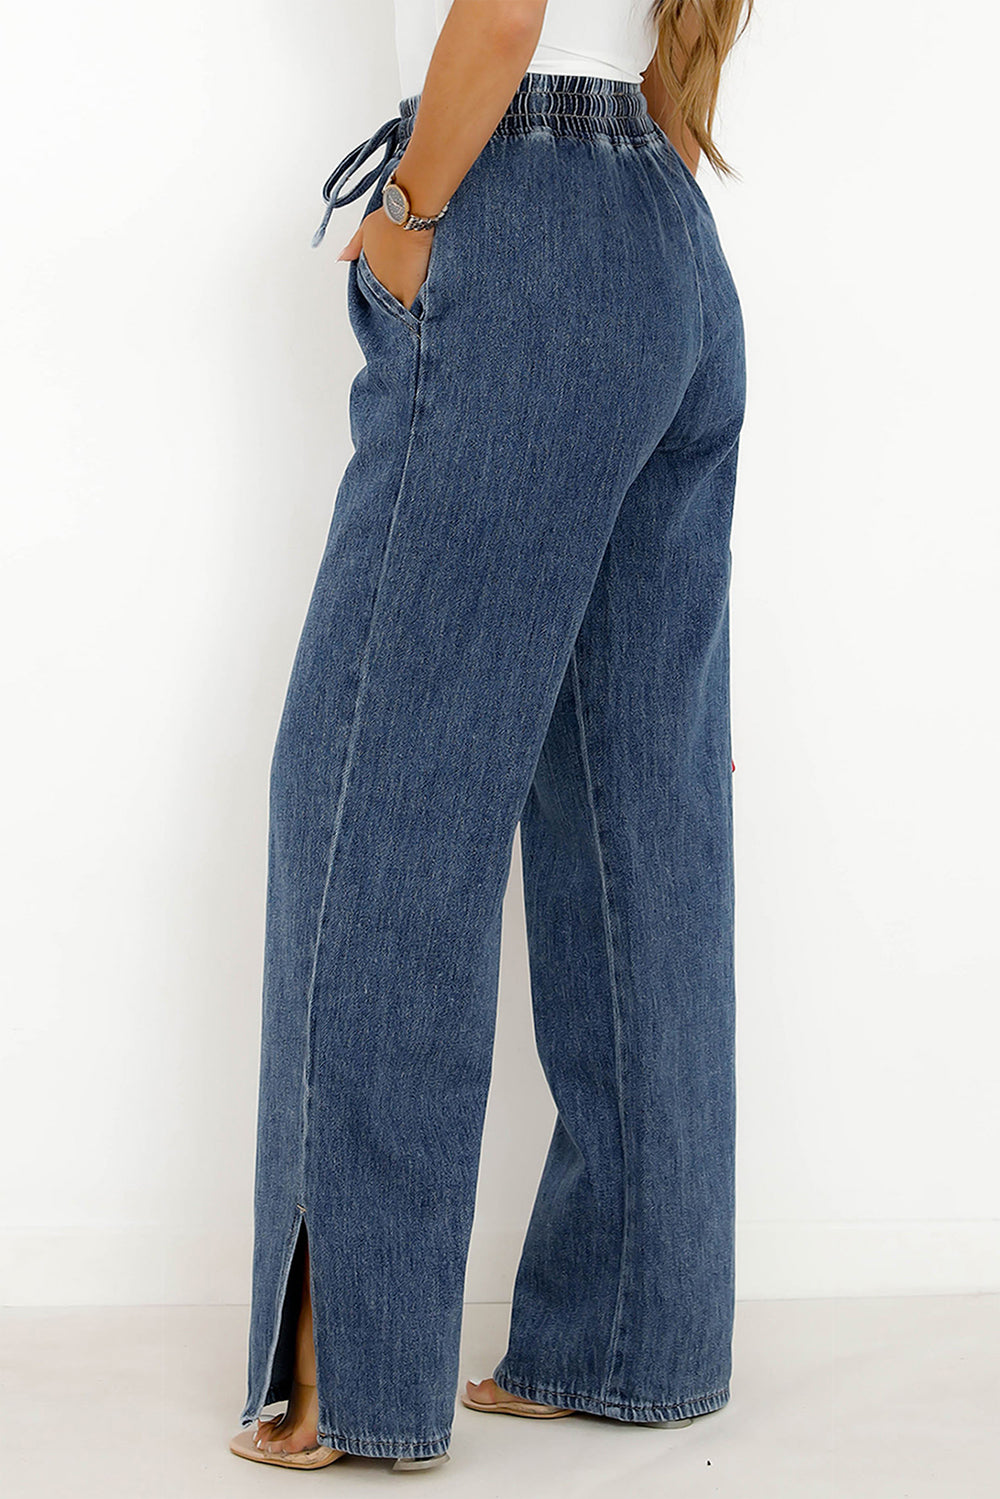 Slit Decision Wide Leg Jeans with Pockets